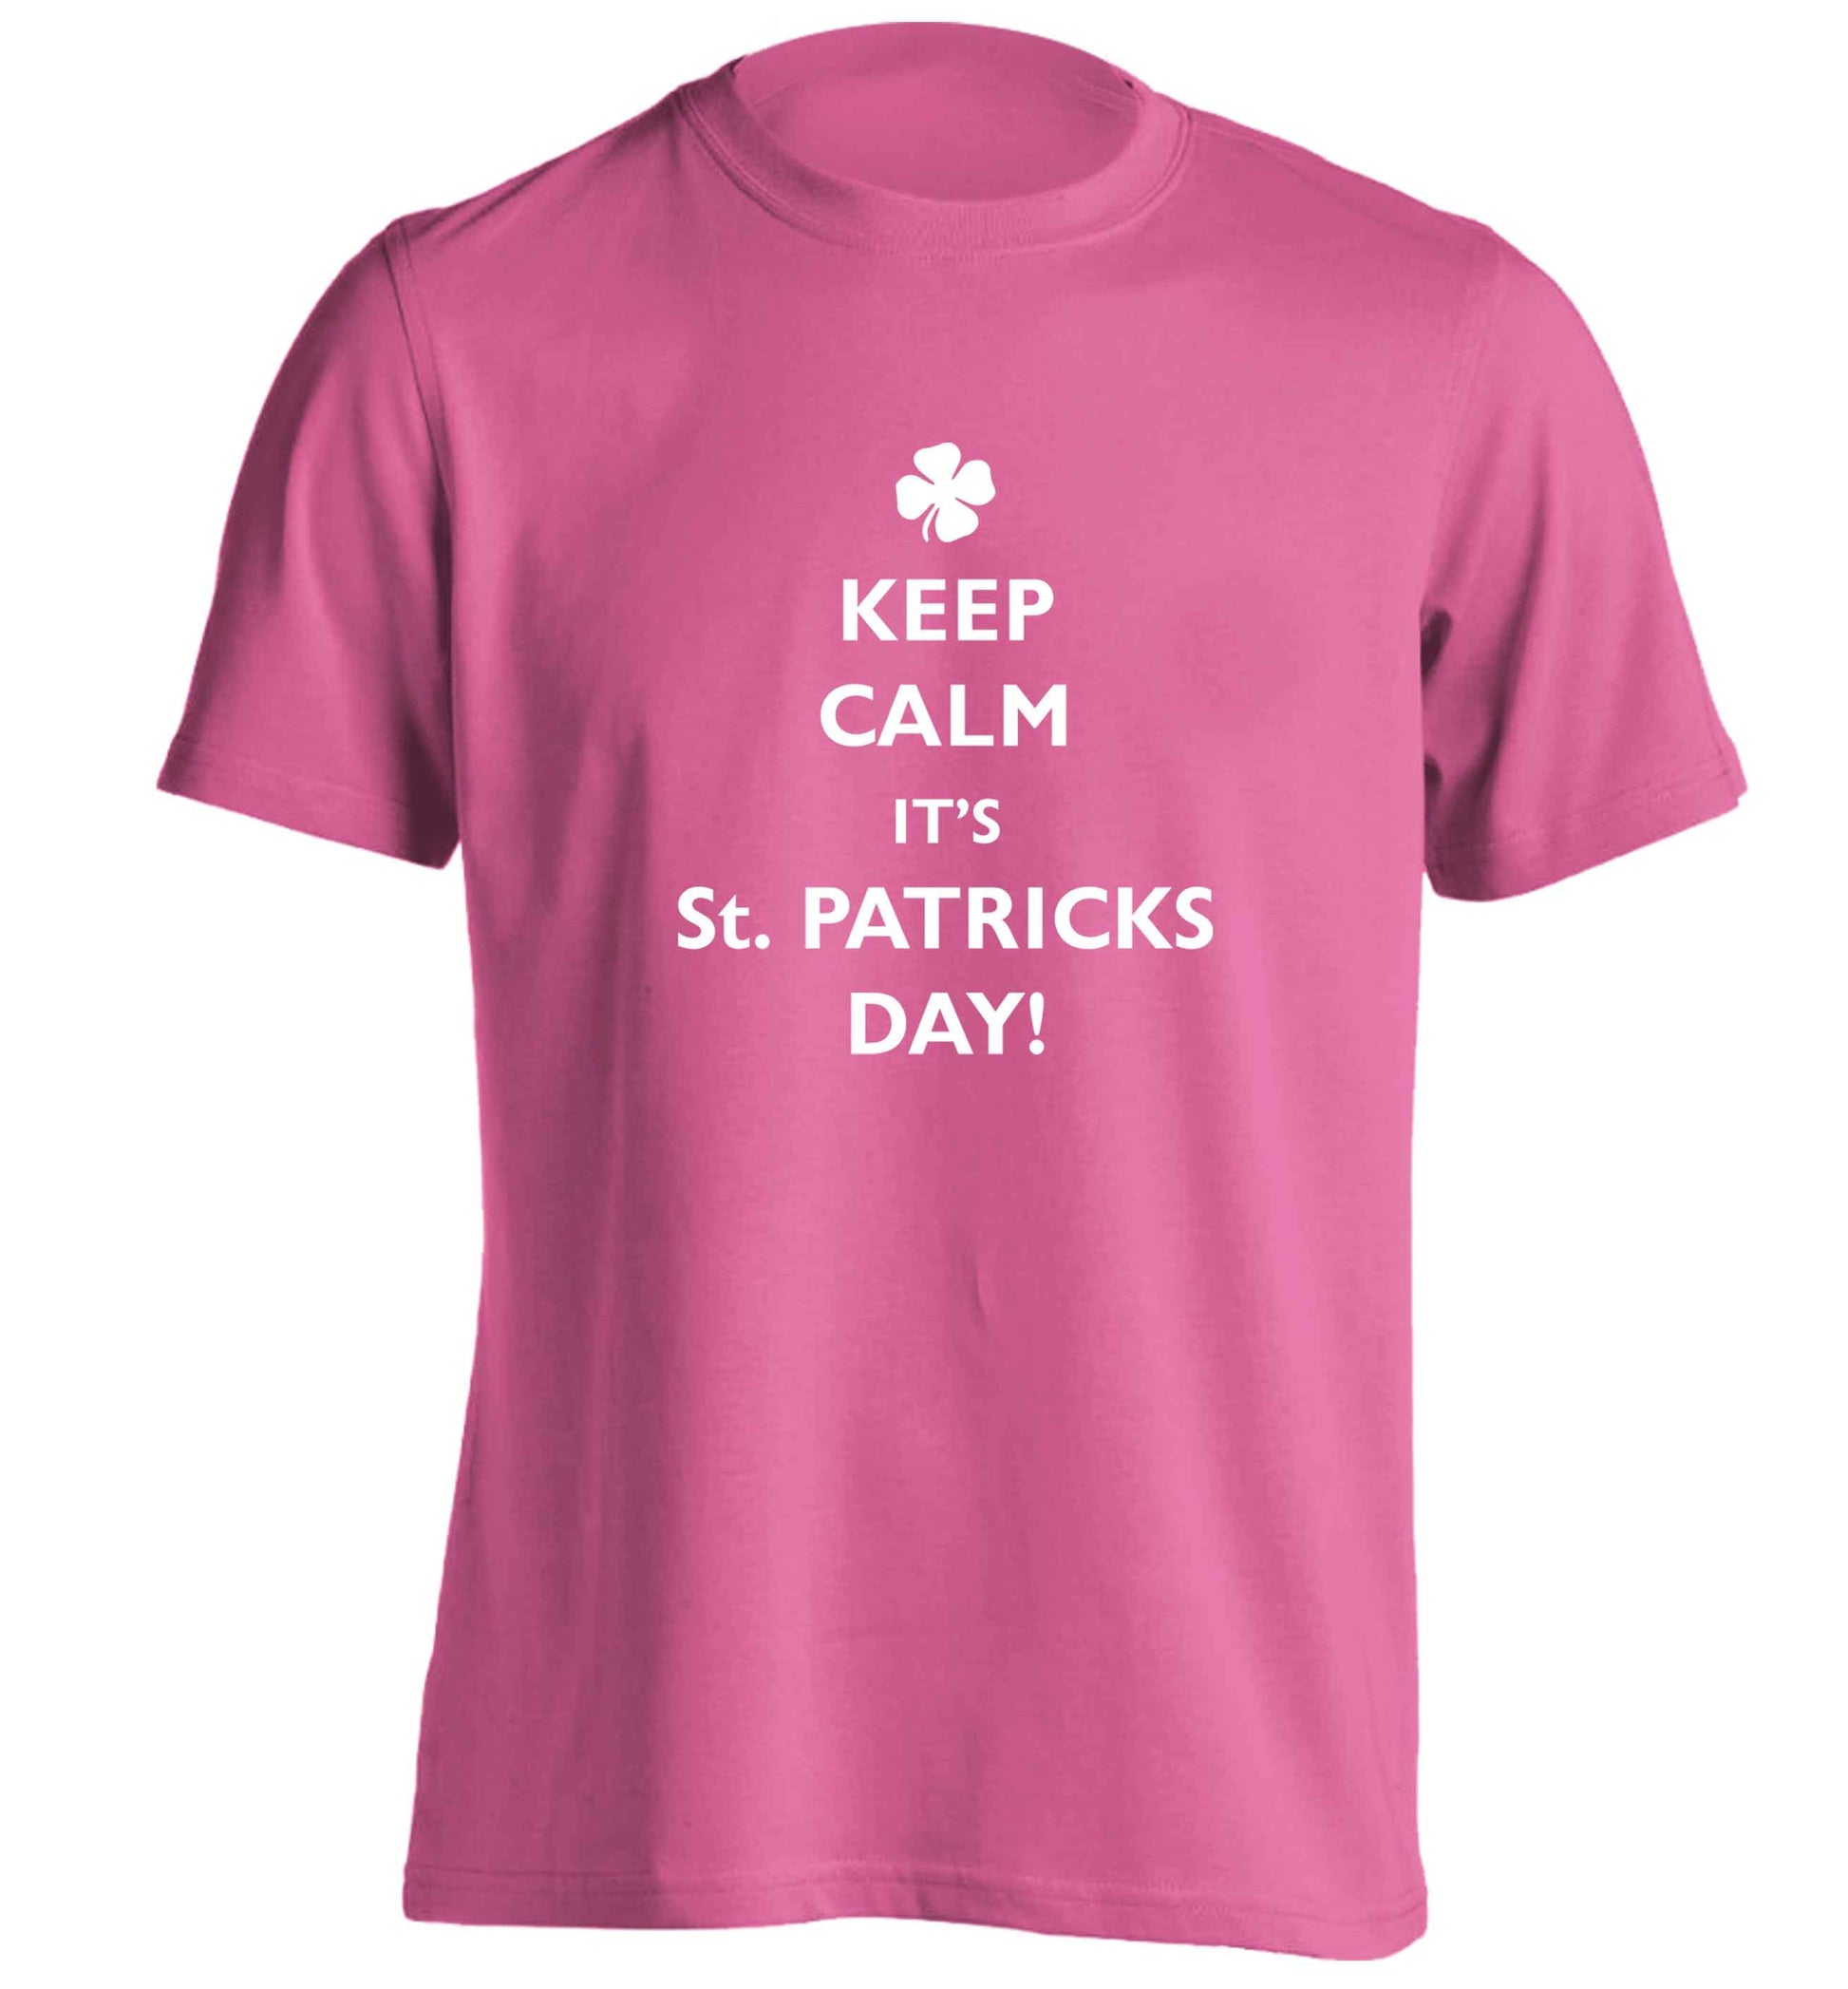 Keep calm it's St.Patricks day adults unisex pink Tshirt 2XL